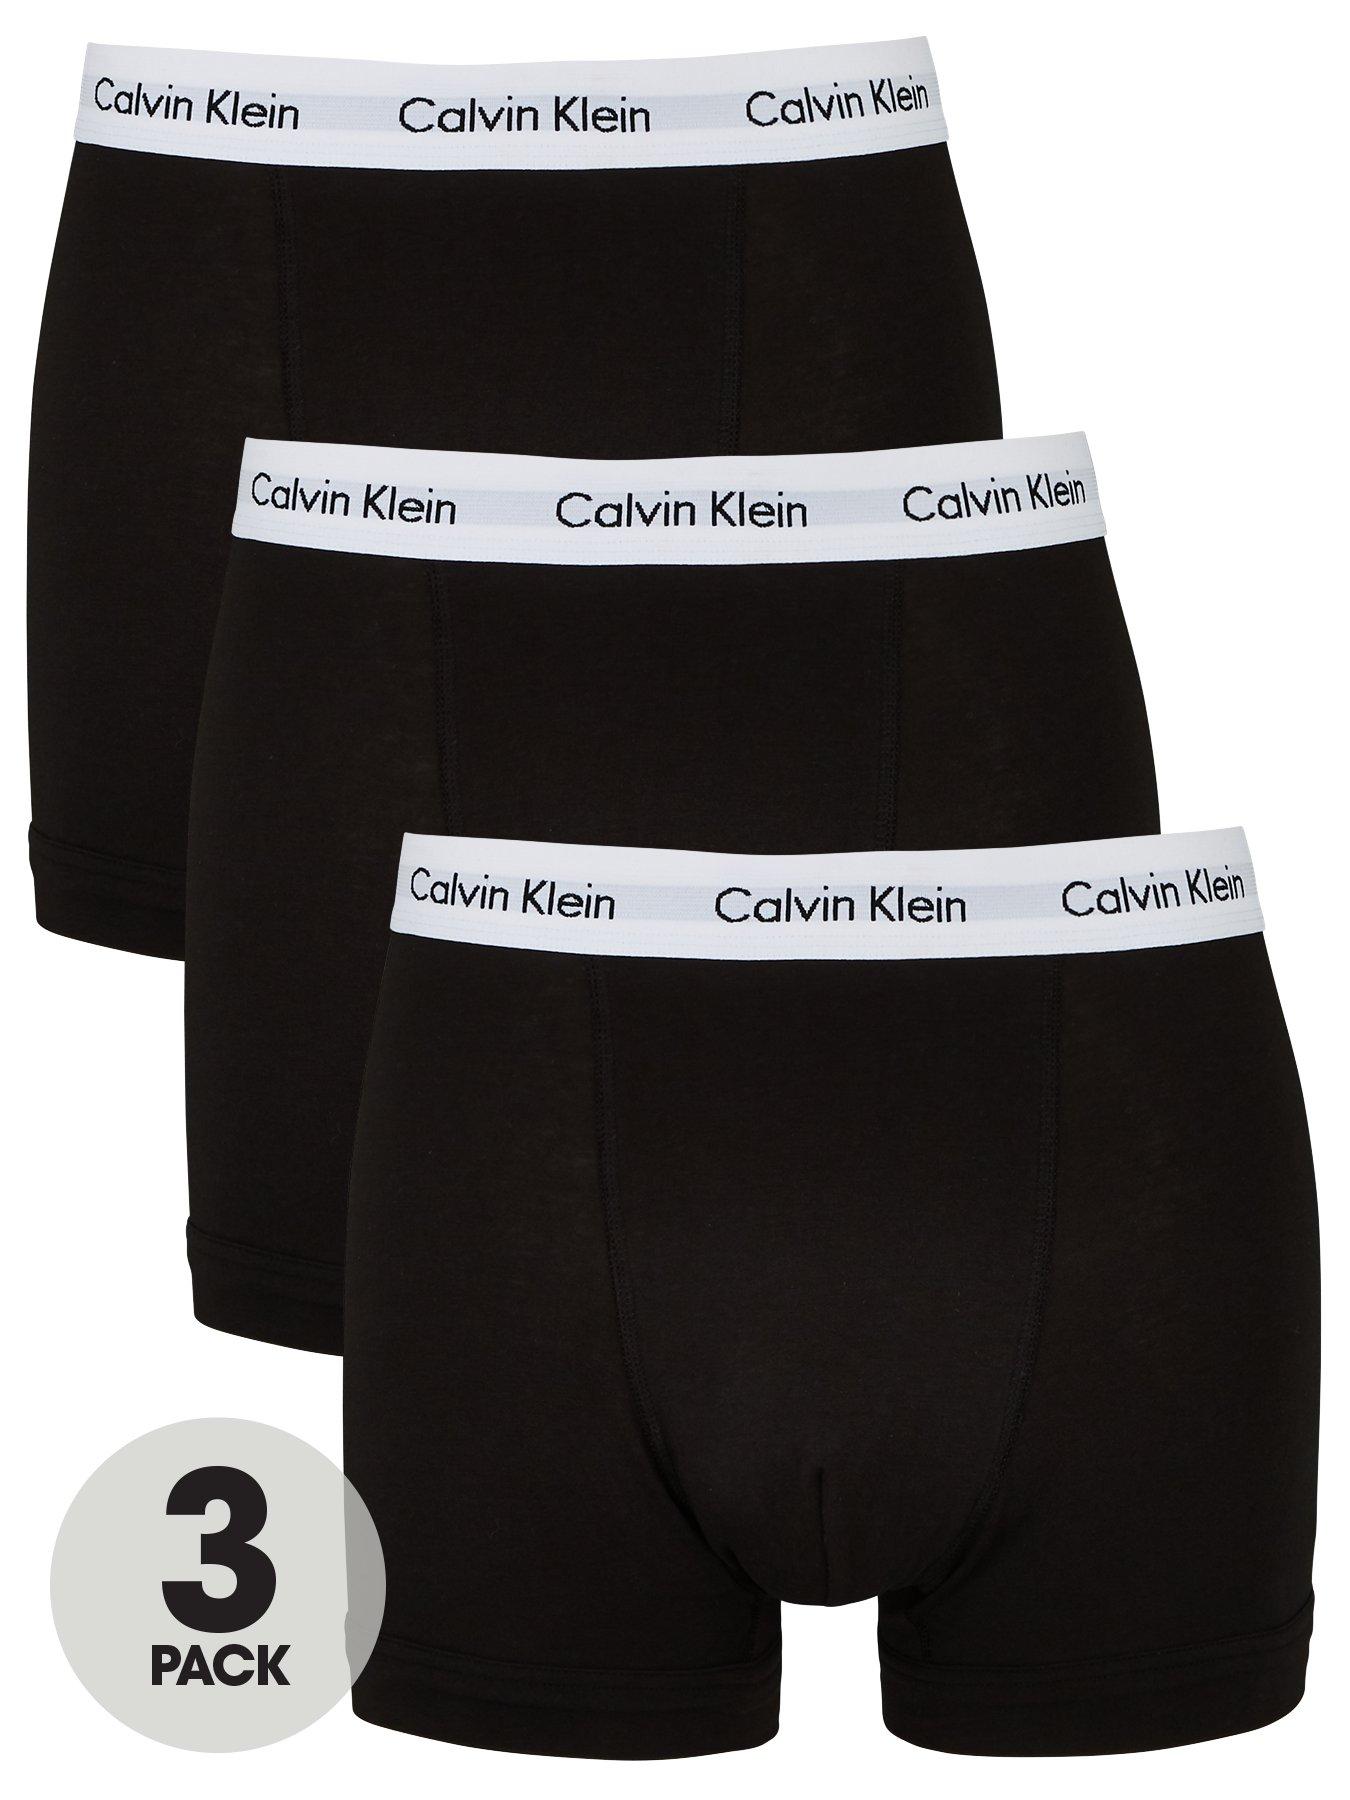 S, Calvin klein, Underwear & socks, Men